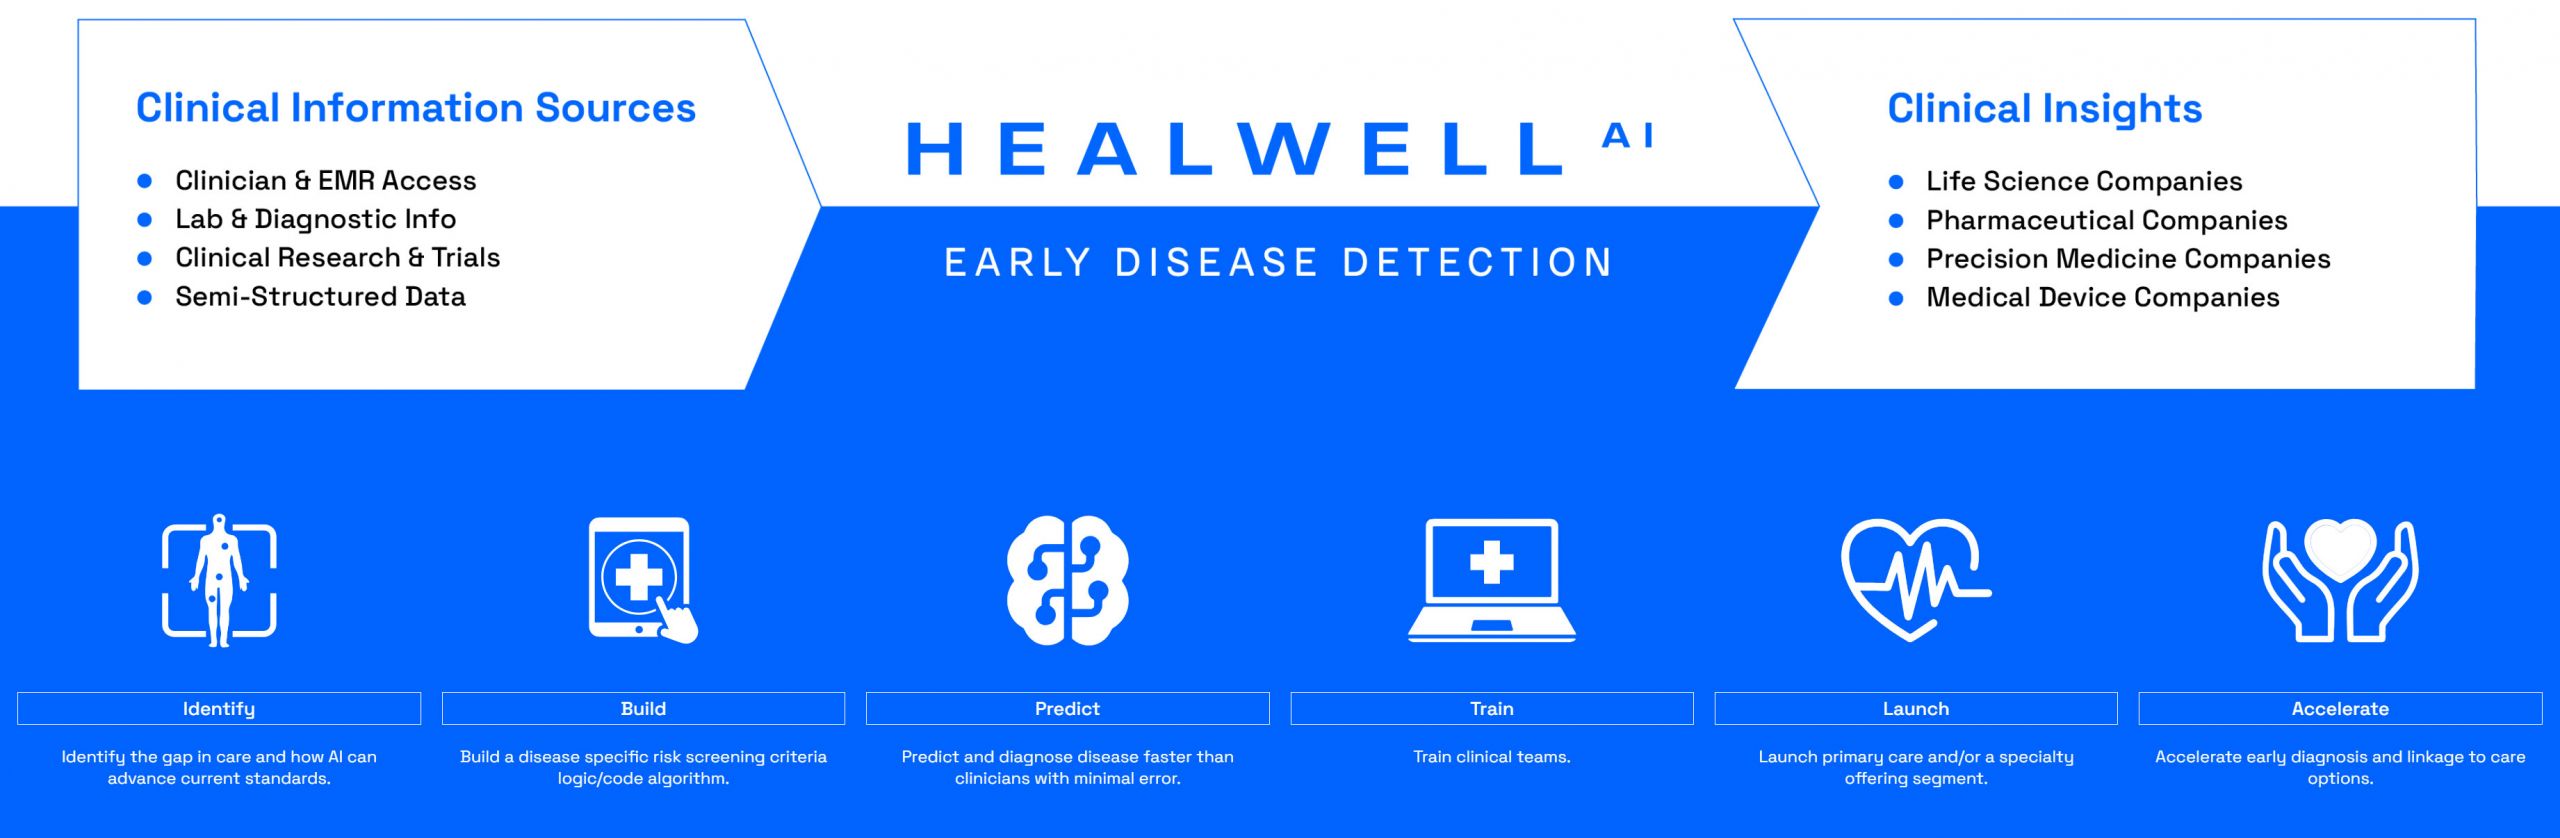 HealWell AI early detection model